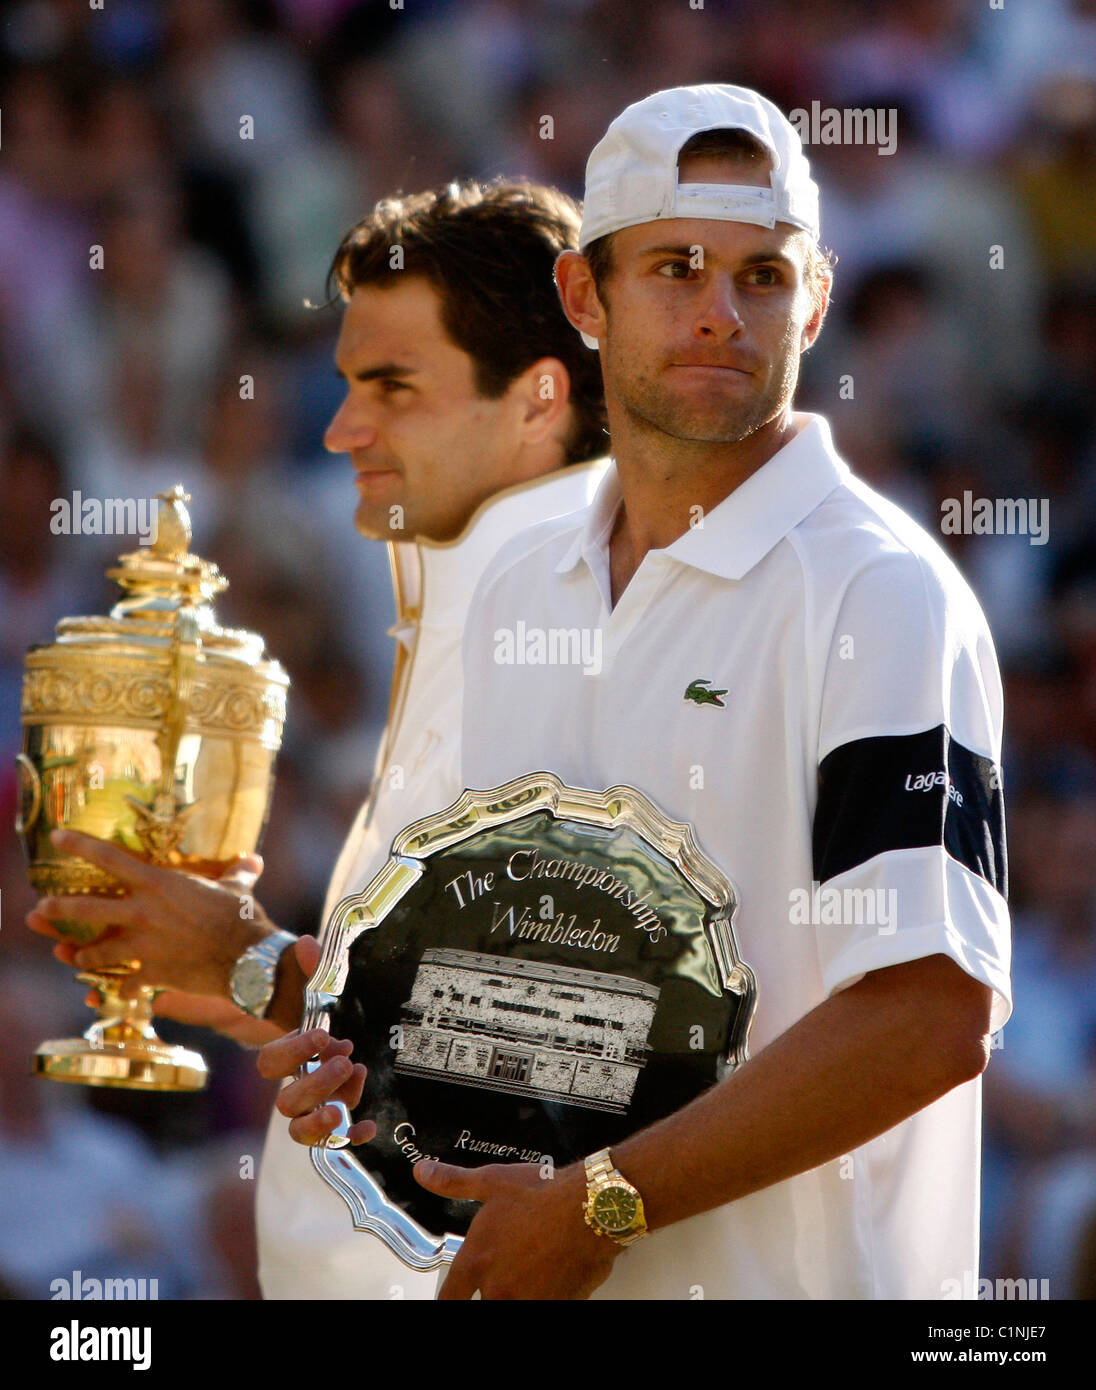 Roger Federer and Andy Roddick 2009 Wimbledon Tennis Championships - Men's  Single Final London, England - 05.07.09 Stock Photo - Alamy